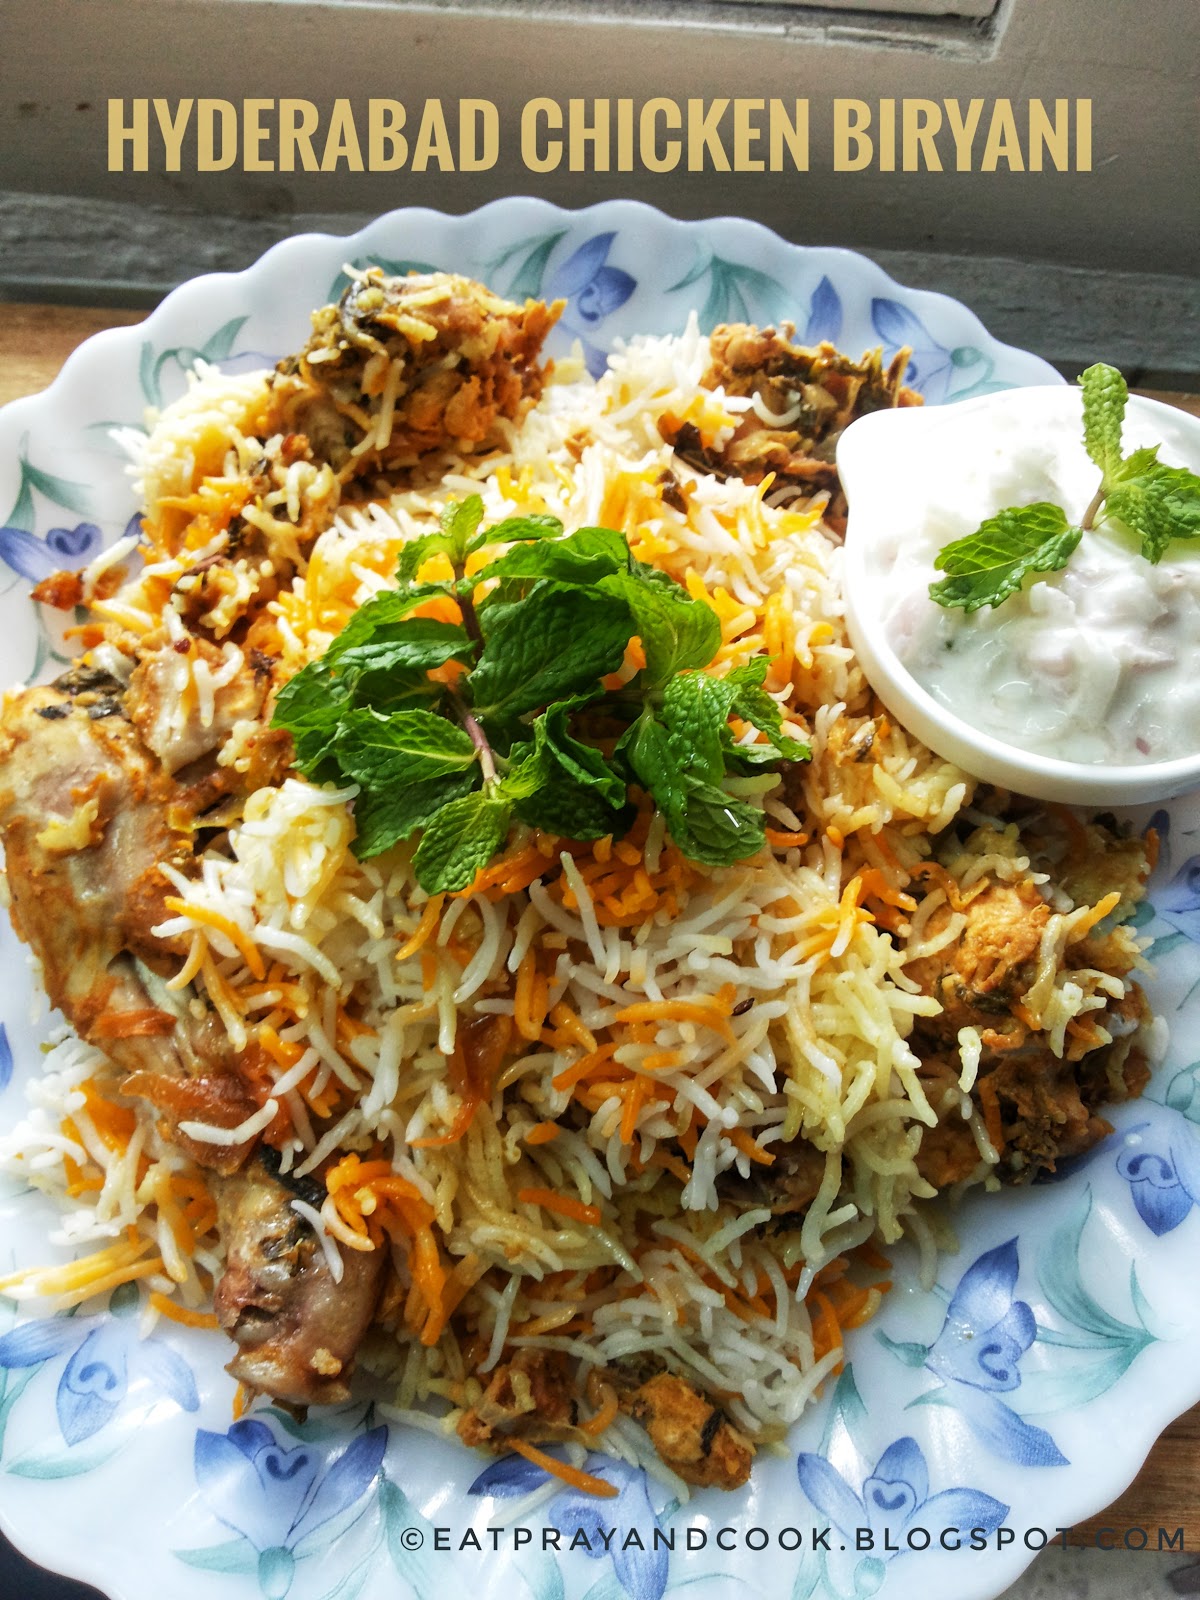 Eat Pray and Cook: Hyderabad Chicken Biryani - Delectable Dum Biryani